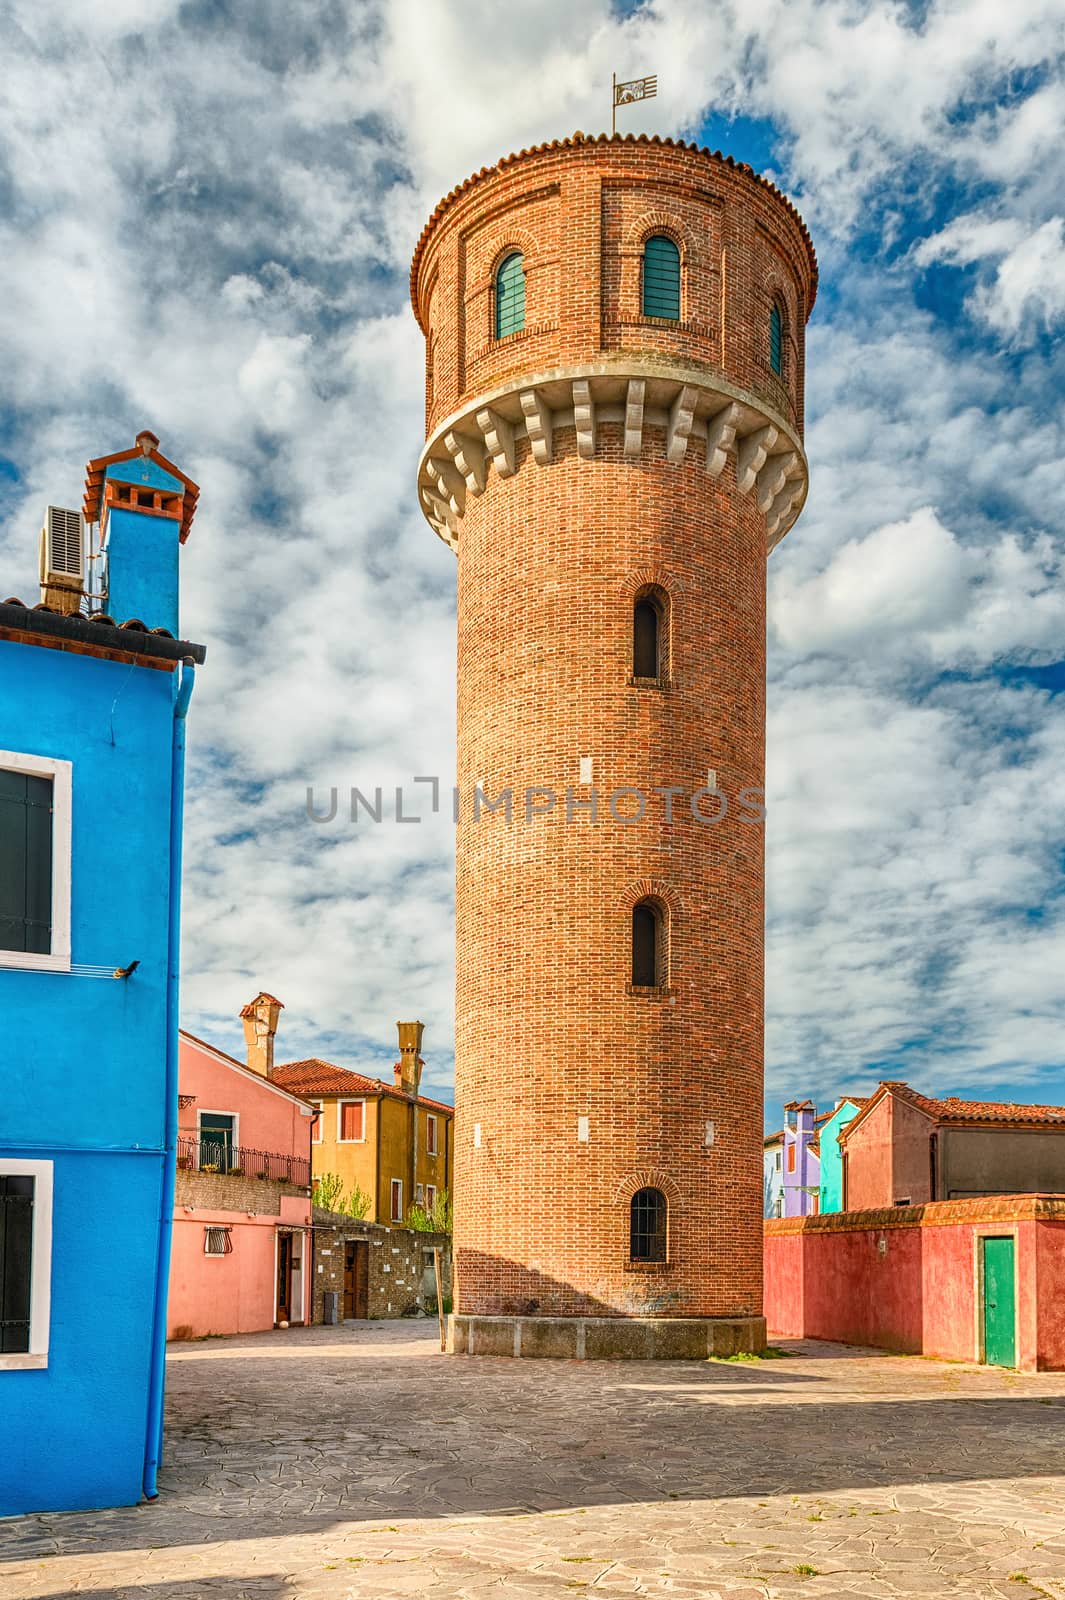 Water tower on the island of Burano, Venice, Italy by marcorubino